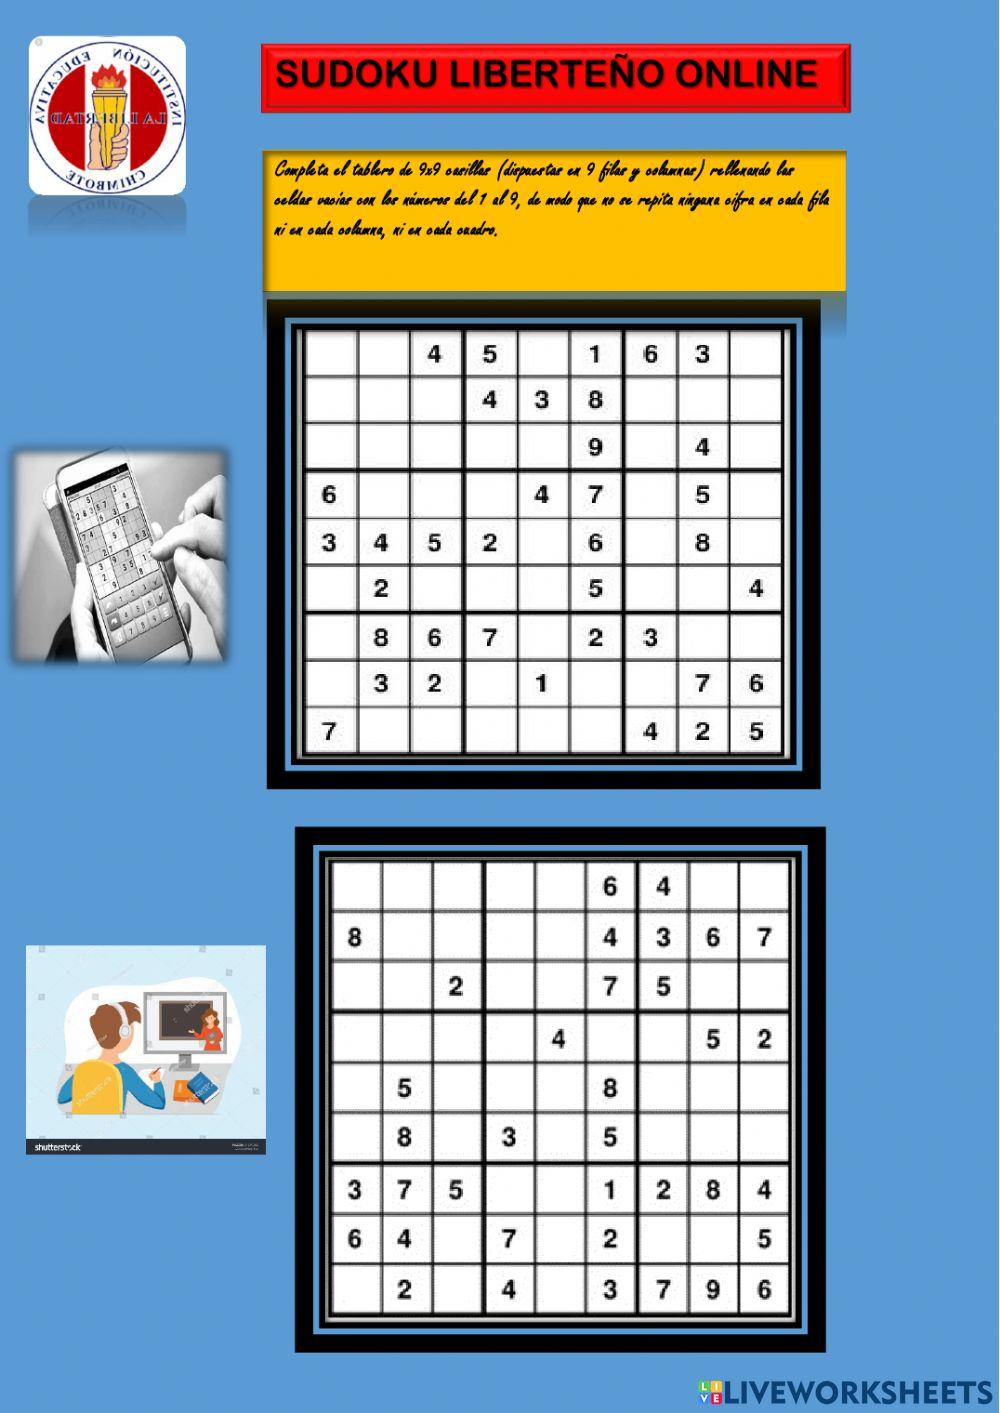 Sudoku liberteño